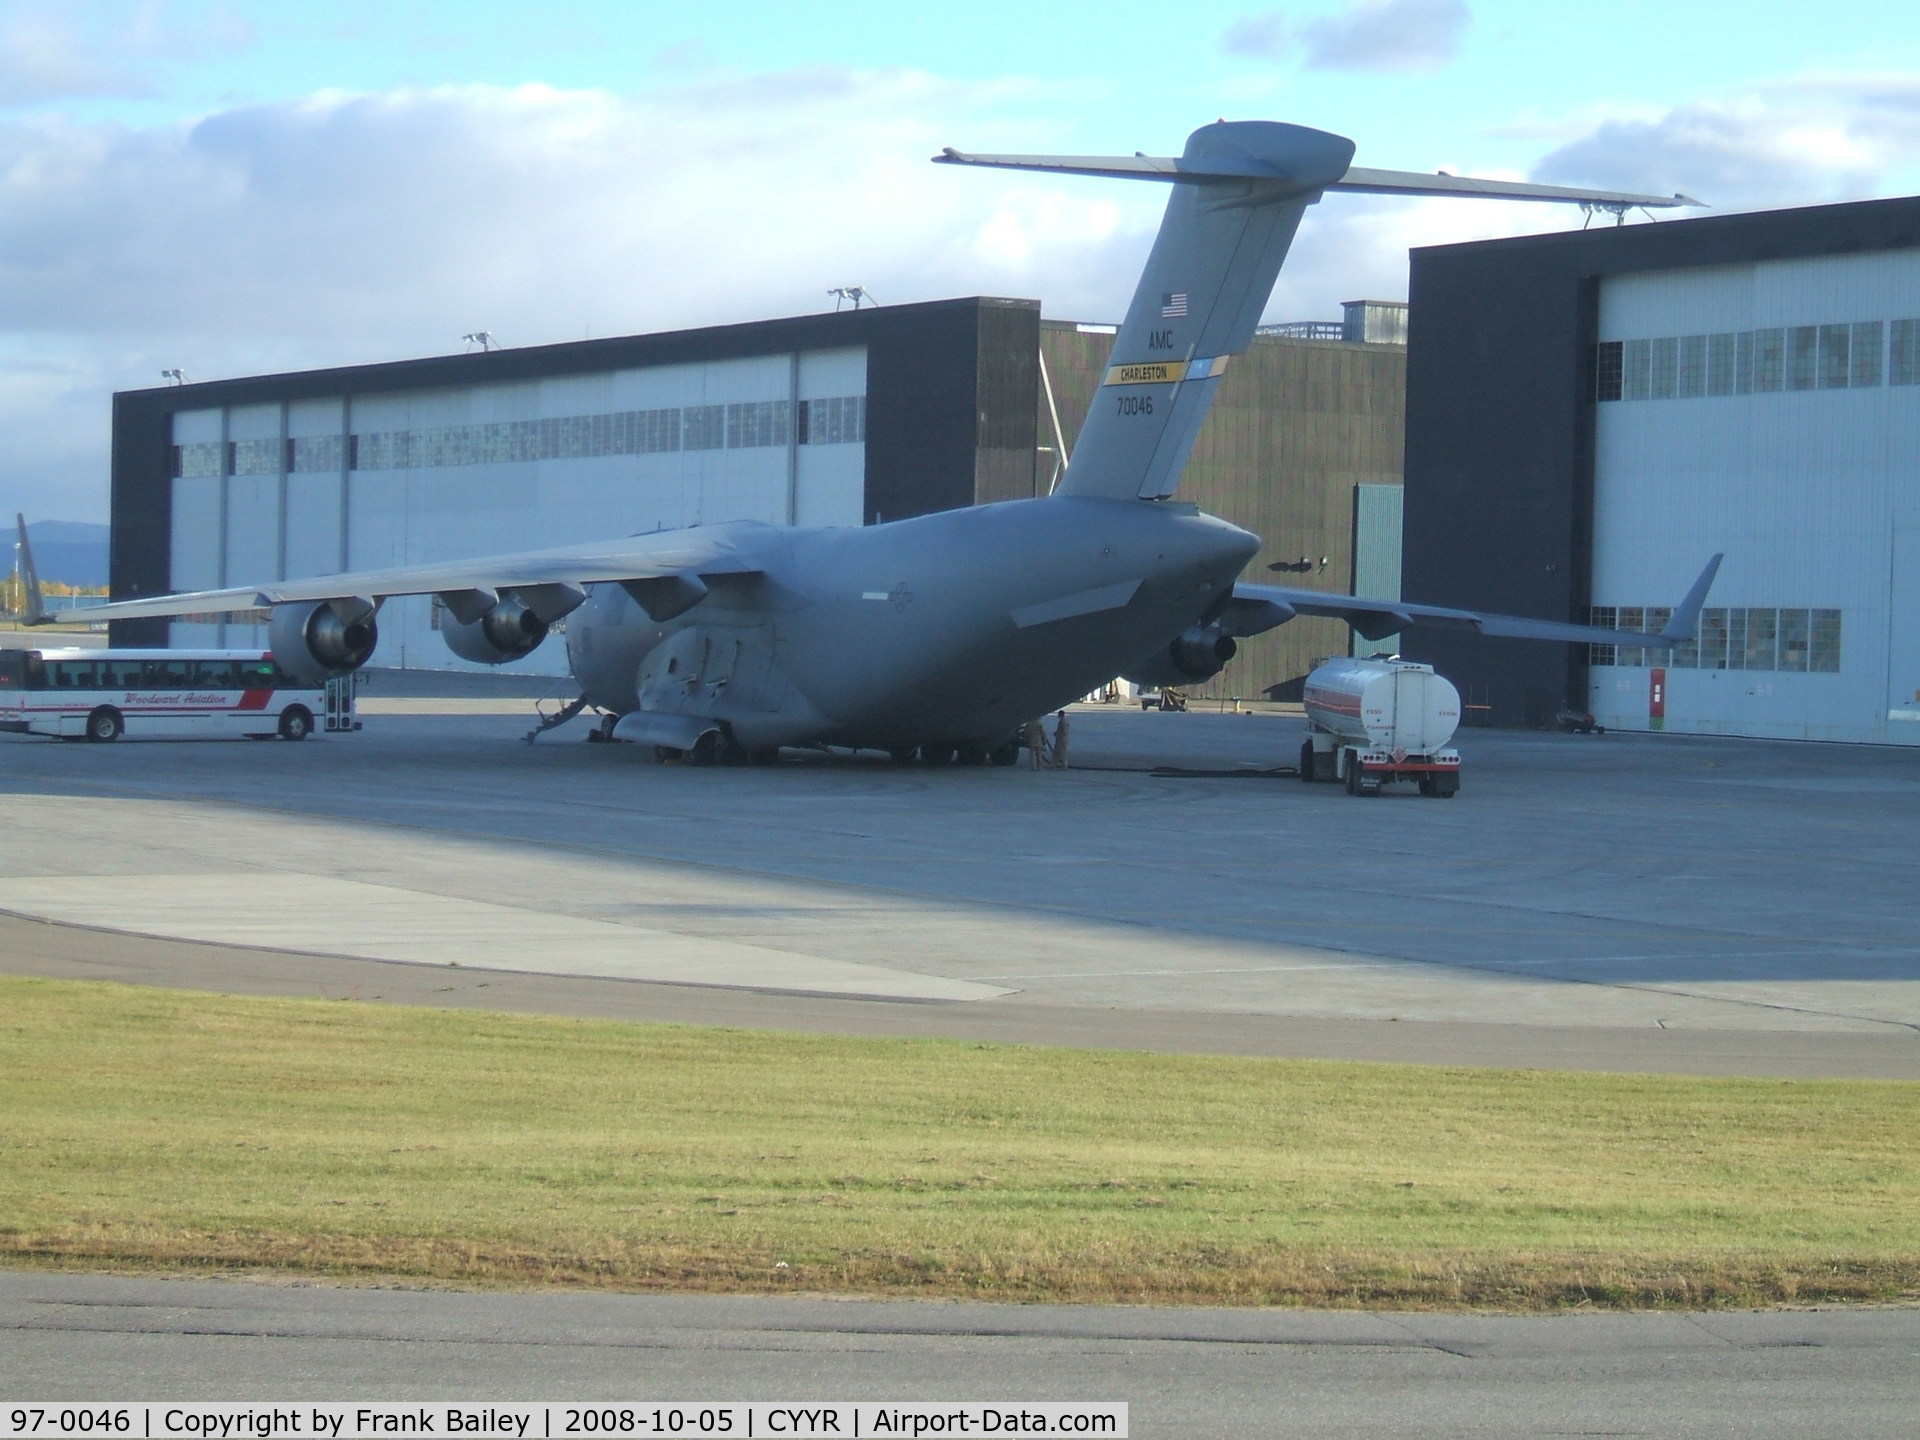 97-0046, 1997 Boeing C-17A Globemaster III C/N P-46, USAF C-17 landed Goose Airport NL